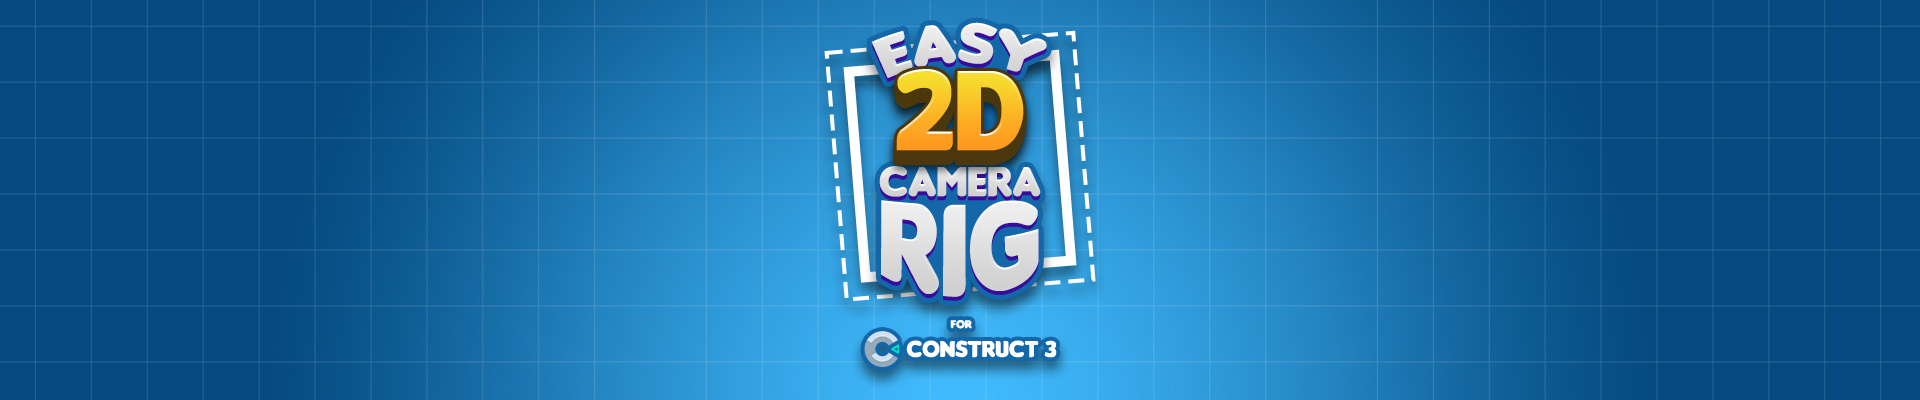 Easy 2D Camera Rig - Construct 3